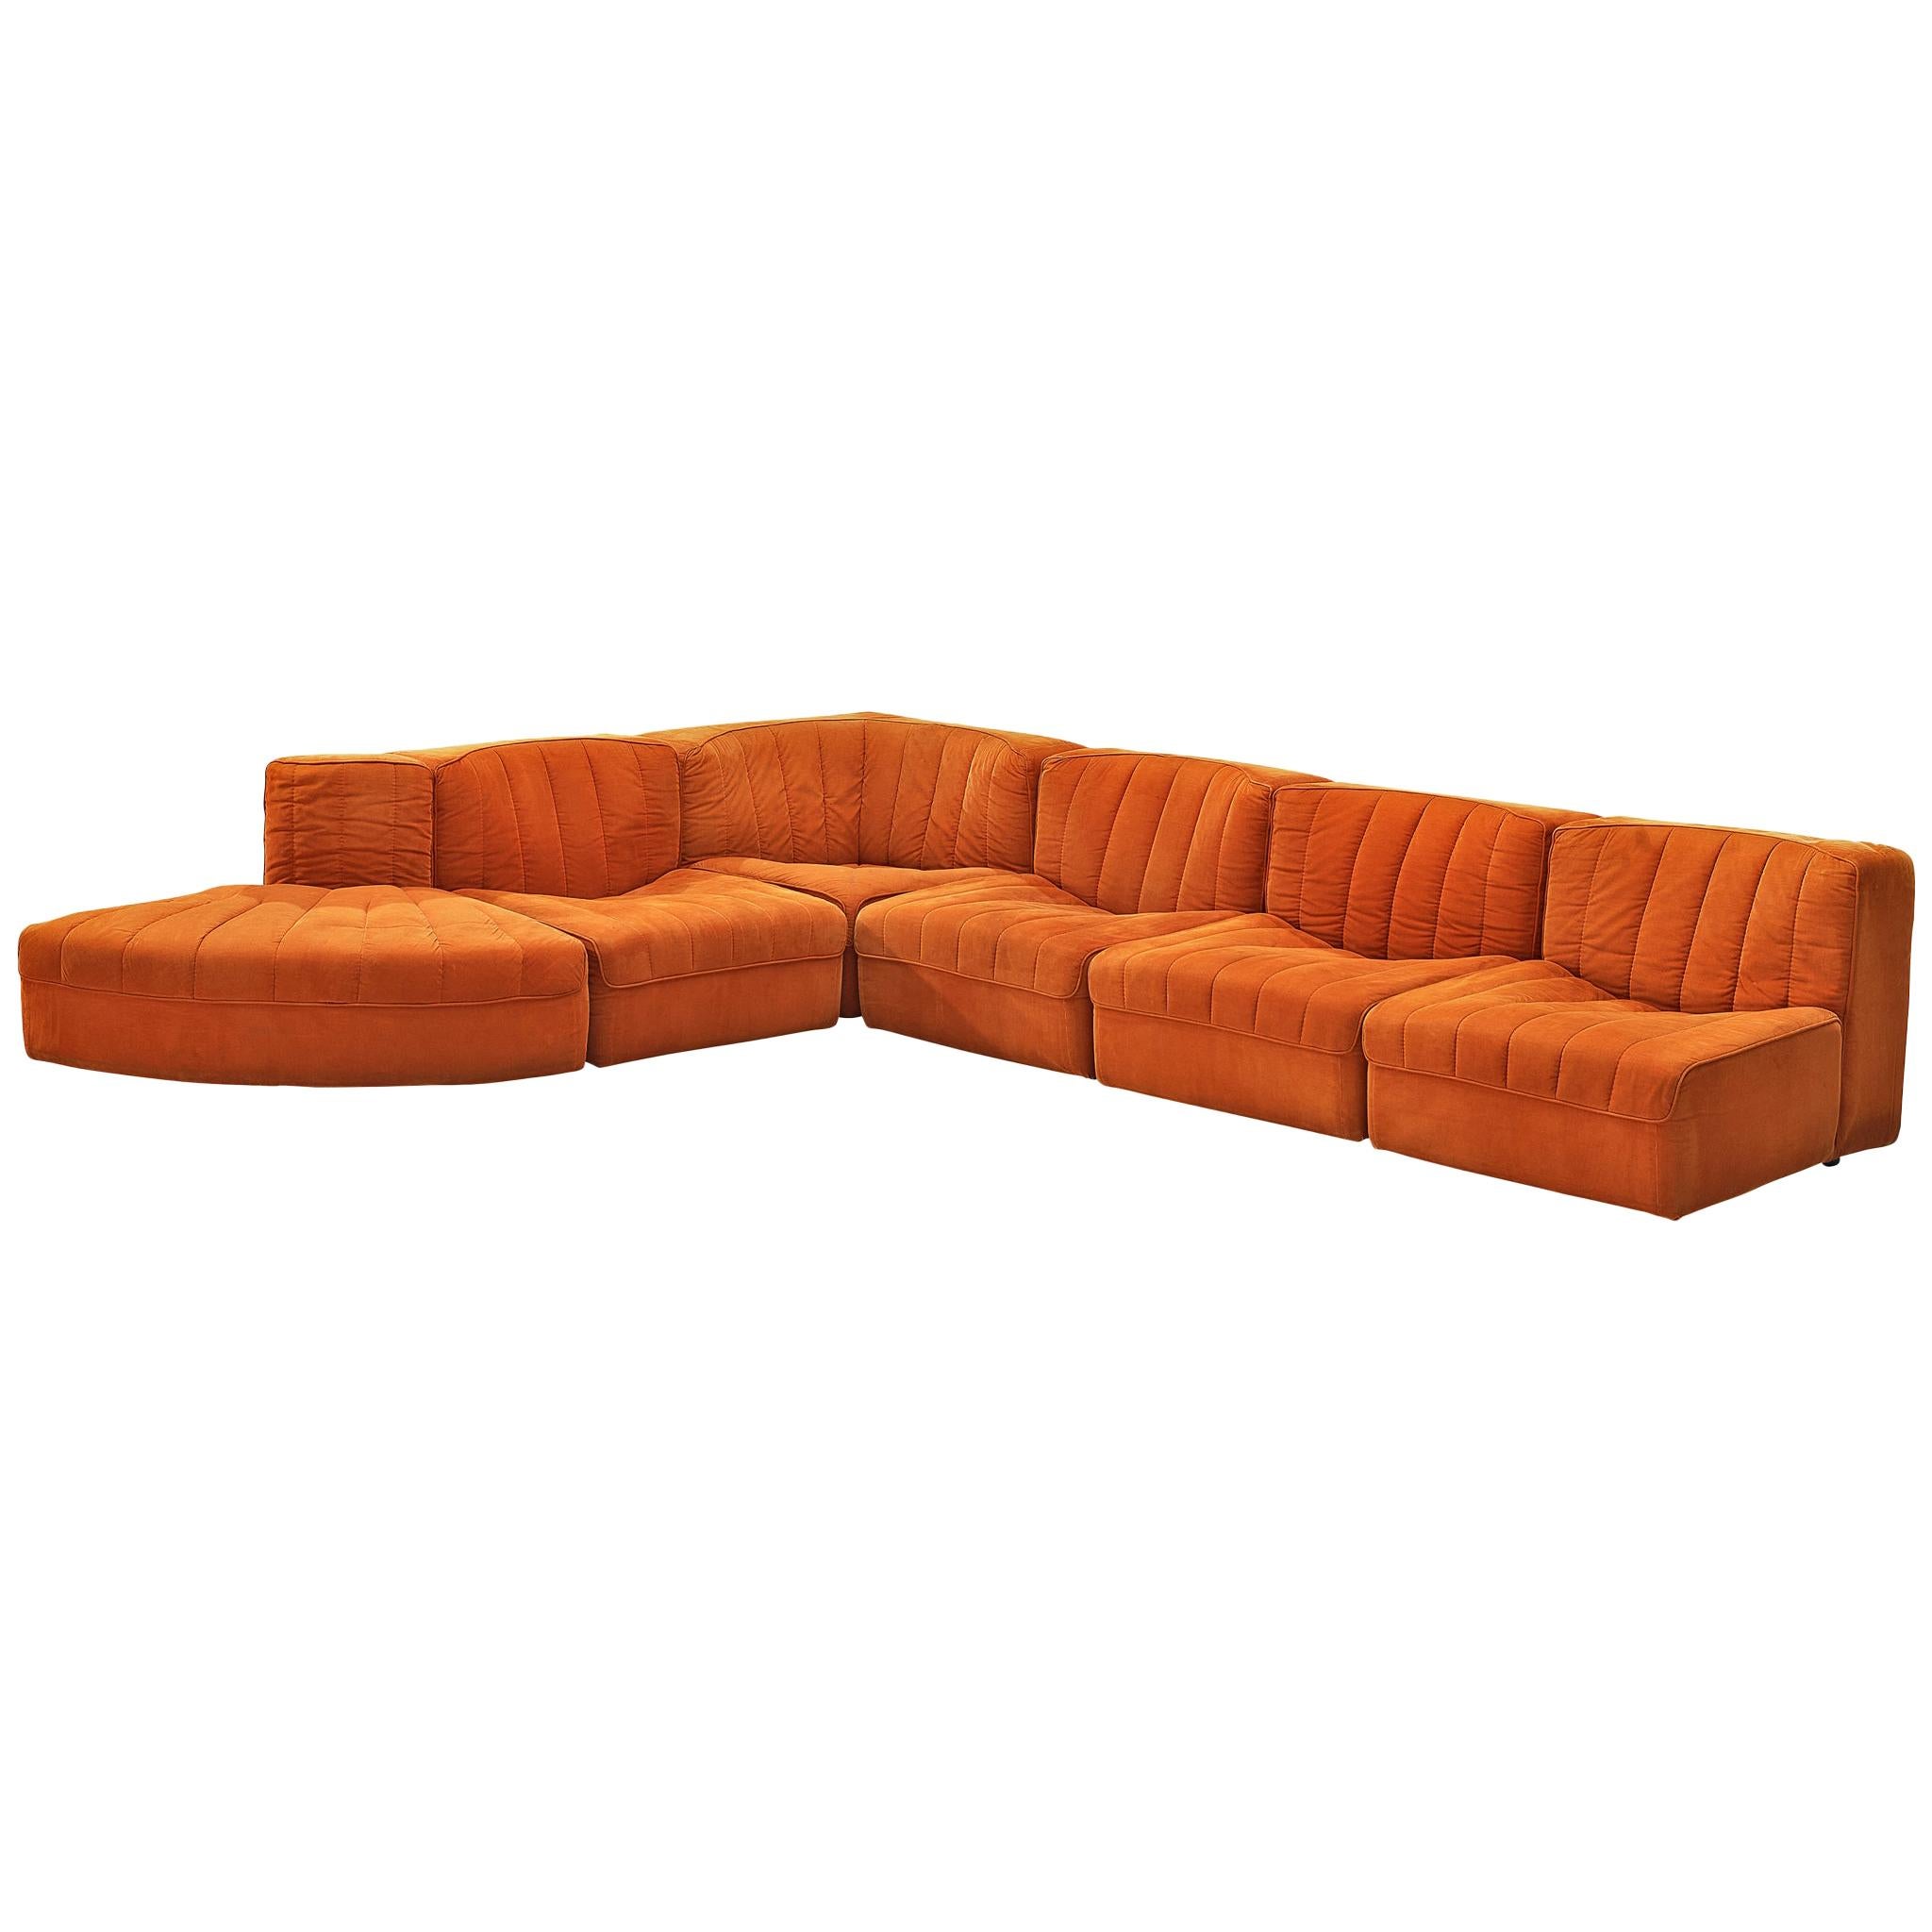 Tito Agnoli for Arflex Sectional Sofa Model '9000' in Orange Upholstery